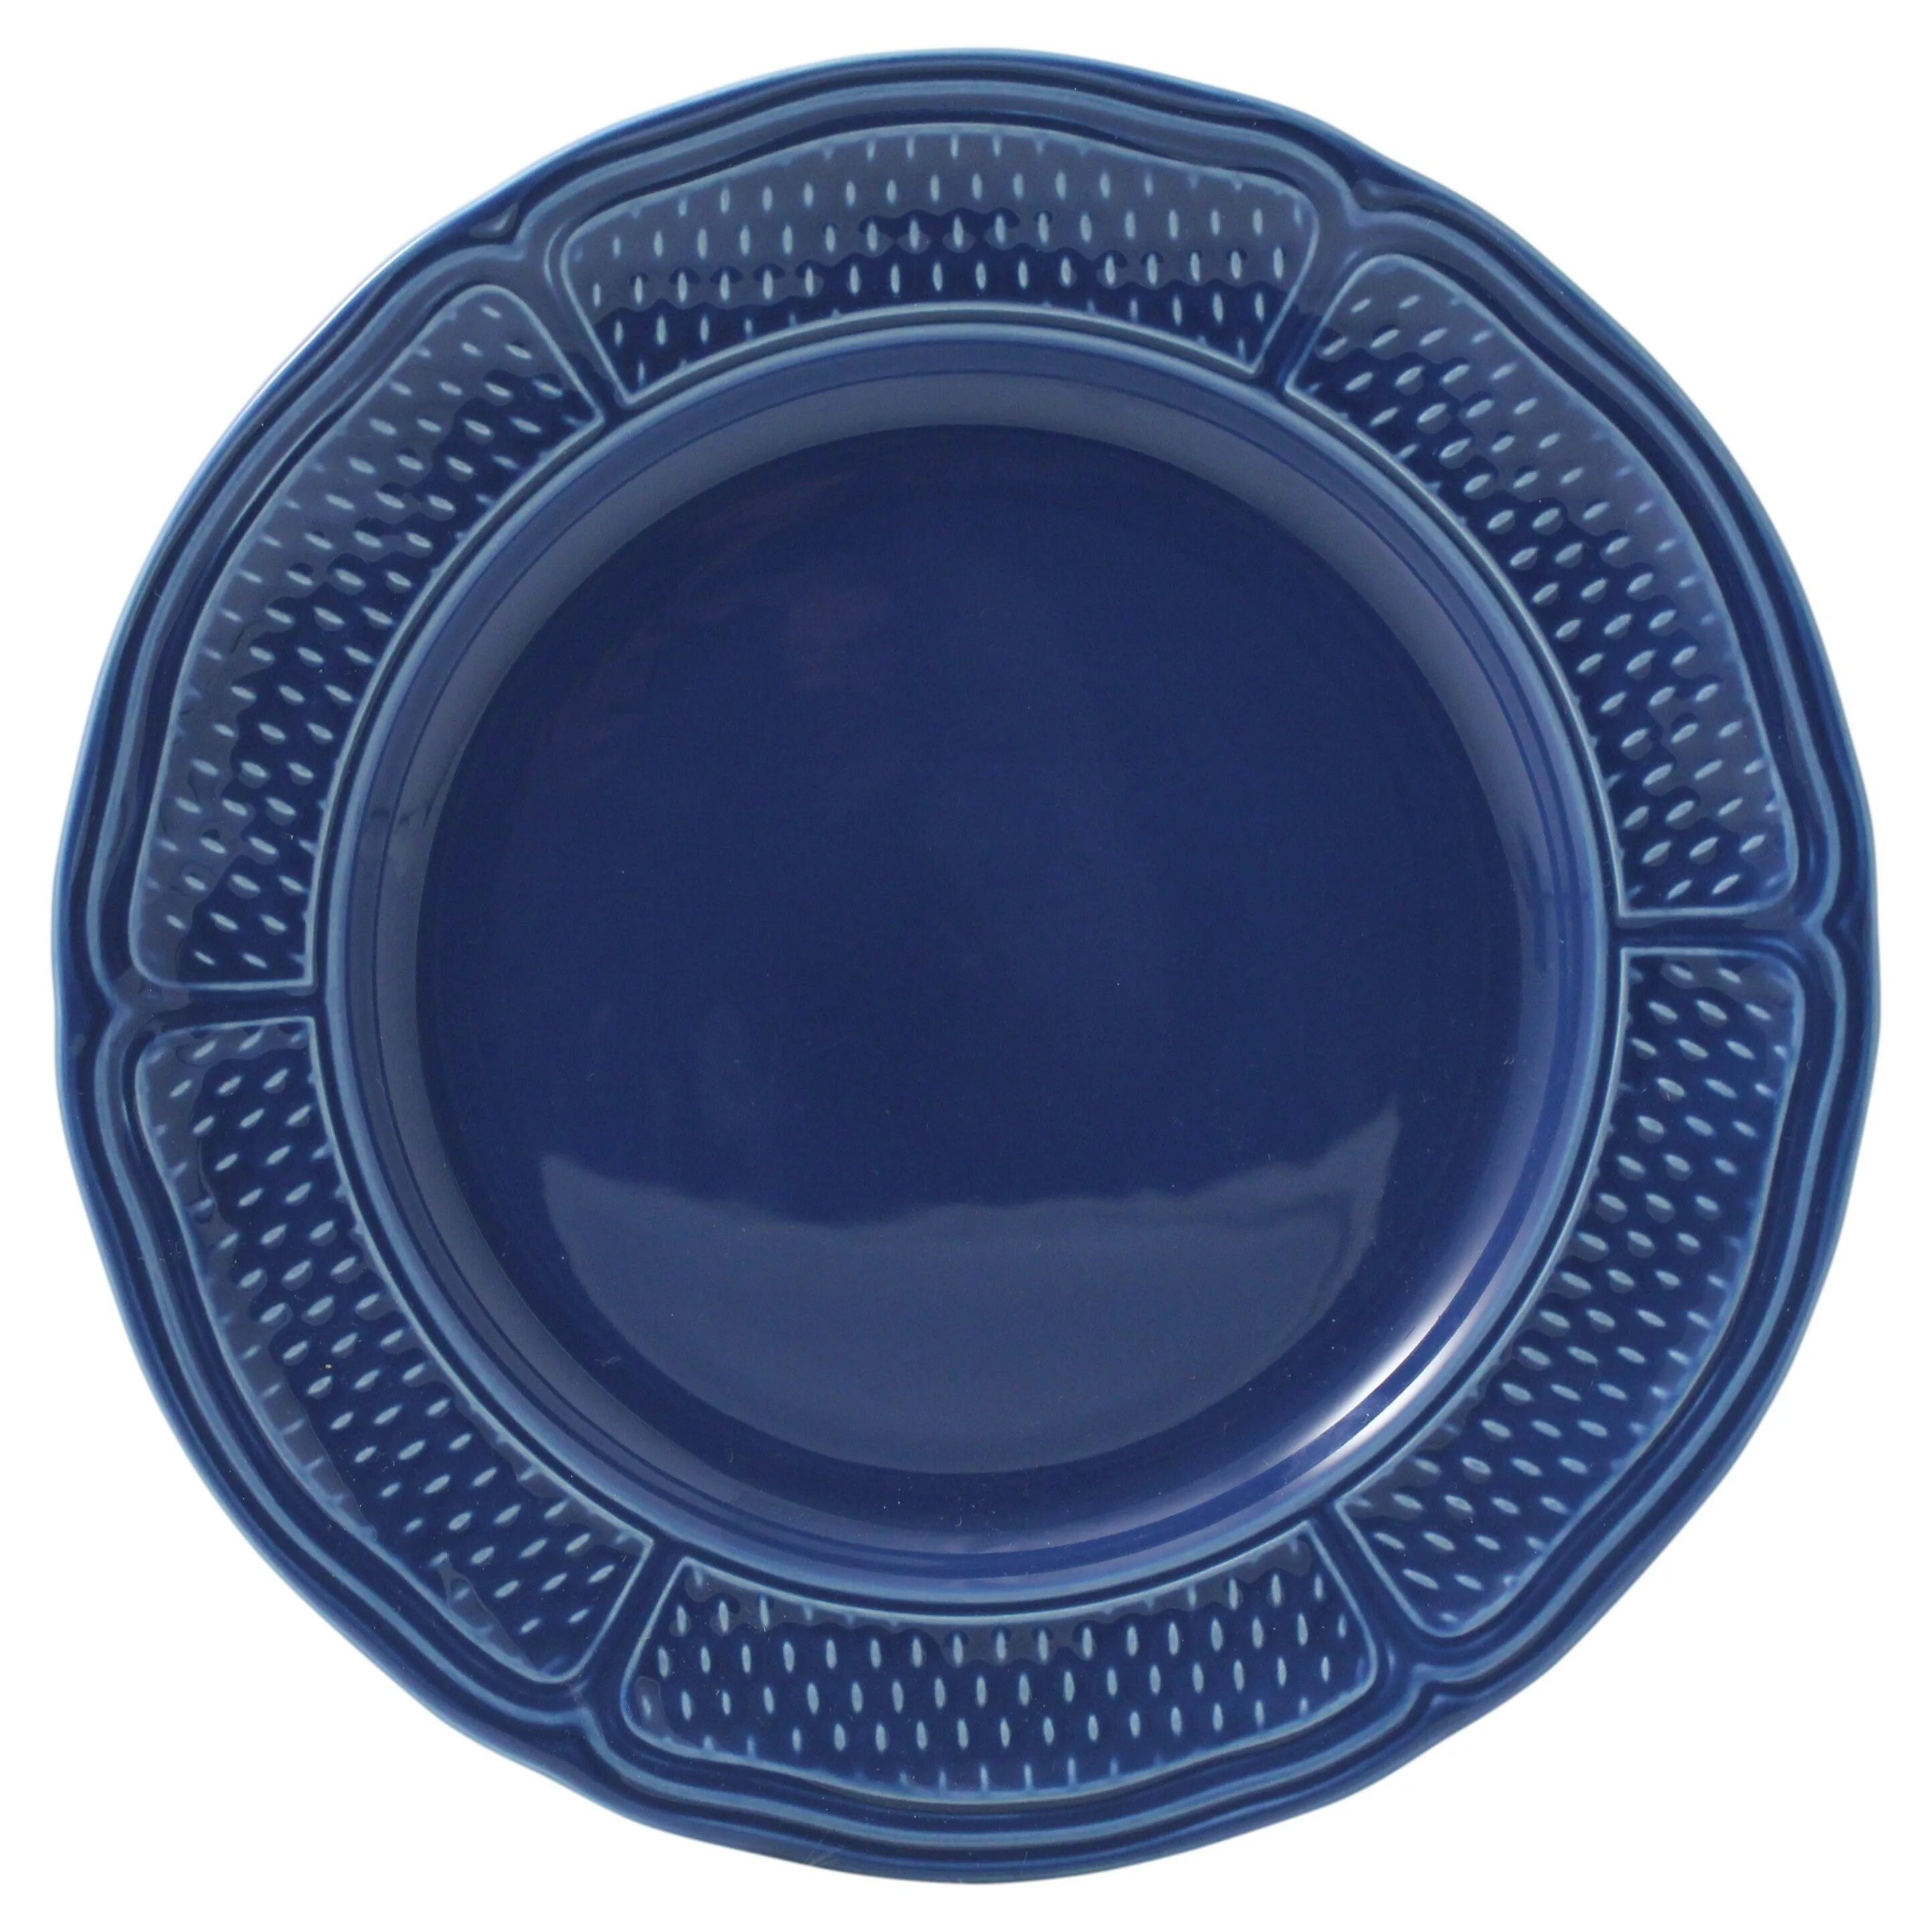 Форум тарелки. Тарелки Gien. Тарелки aux choux. Синяя тарелка. Тарелка обеденная.